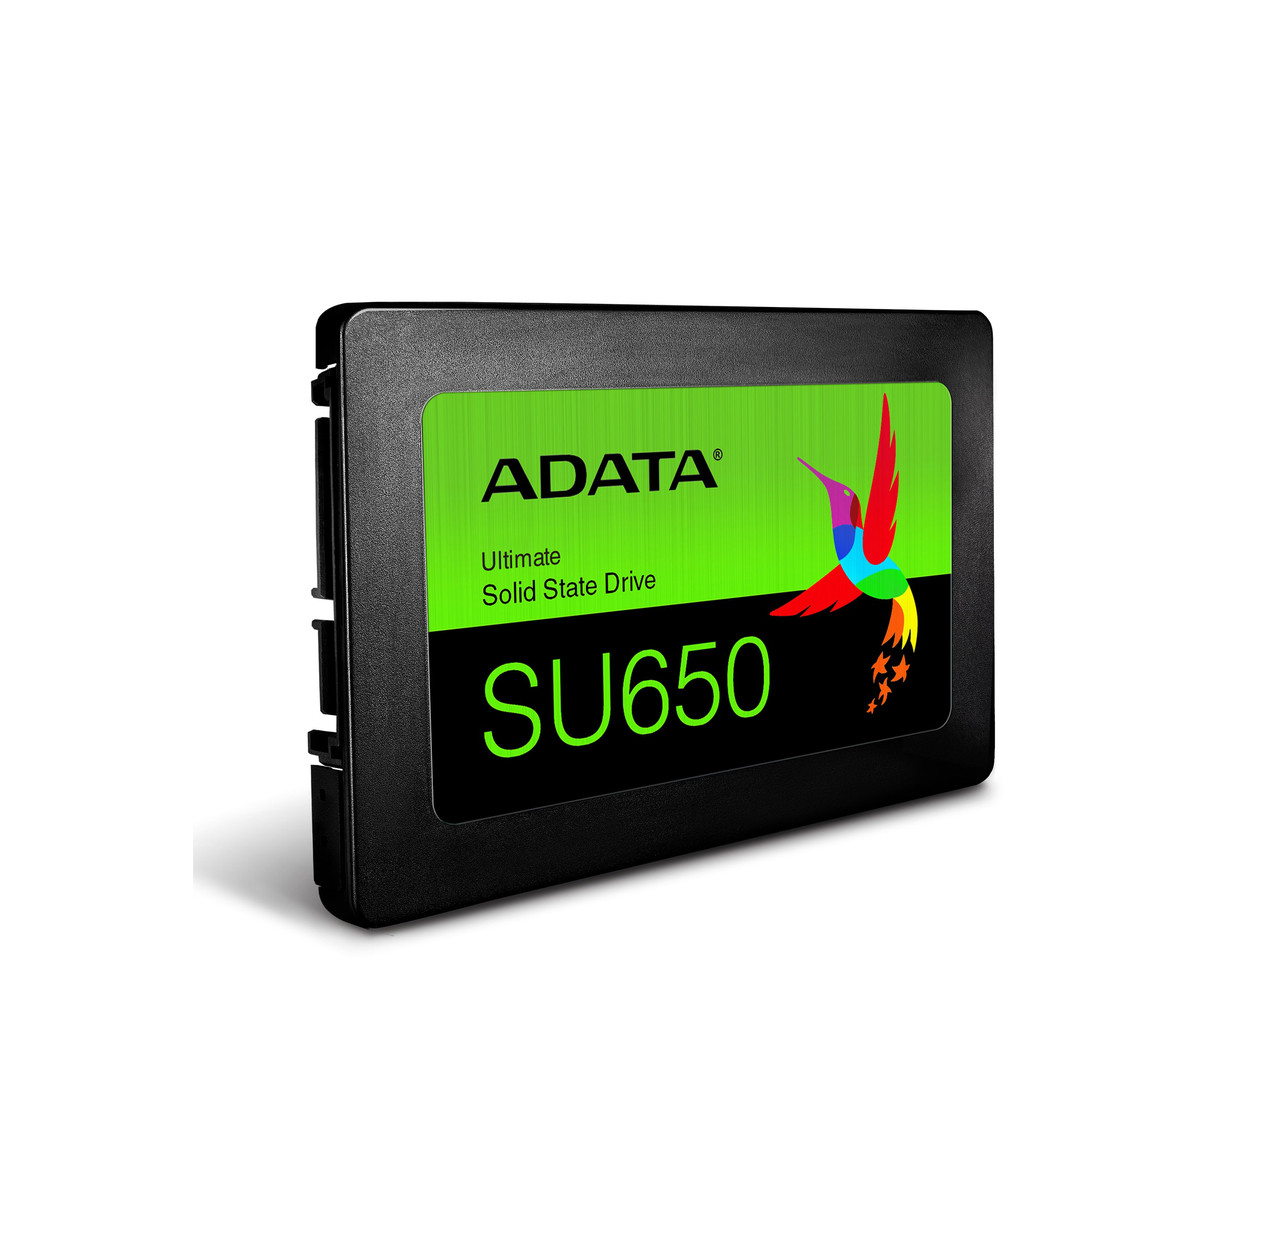 Ssd 650. 240 ГБ 2.5" SATA накопитель ADATA su650. SSD A data su650 120gb. ADATA Ultimate su650 240 ГБ SATA asu650ss-240gt-r. Накопитель SSD A-data SATA III 120gb asu650ss-120gt-r Ultimate su650 2.5"\ADATA.